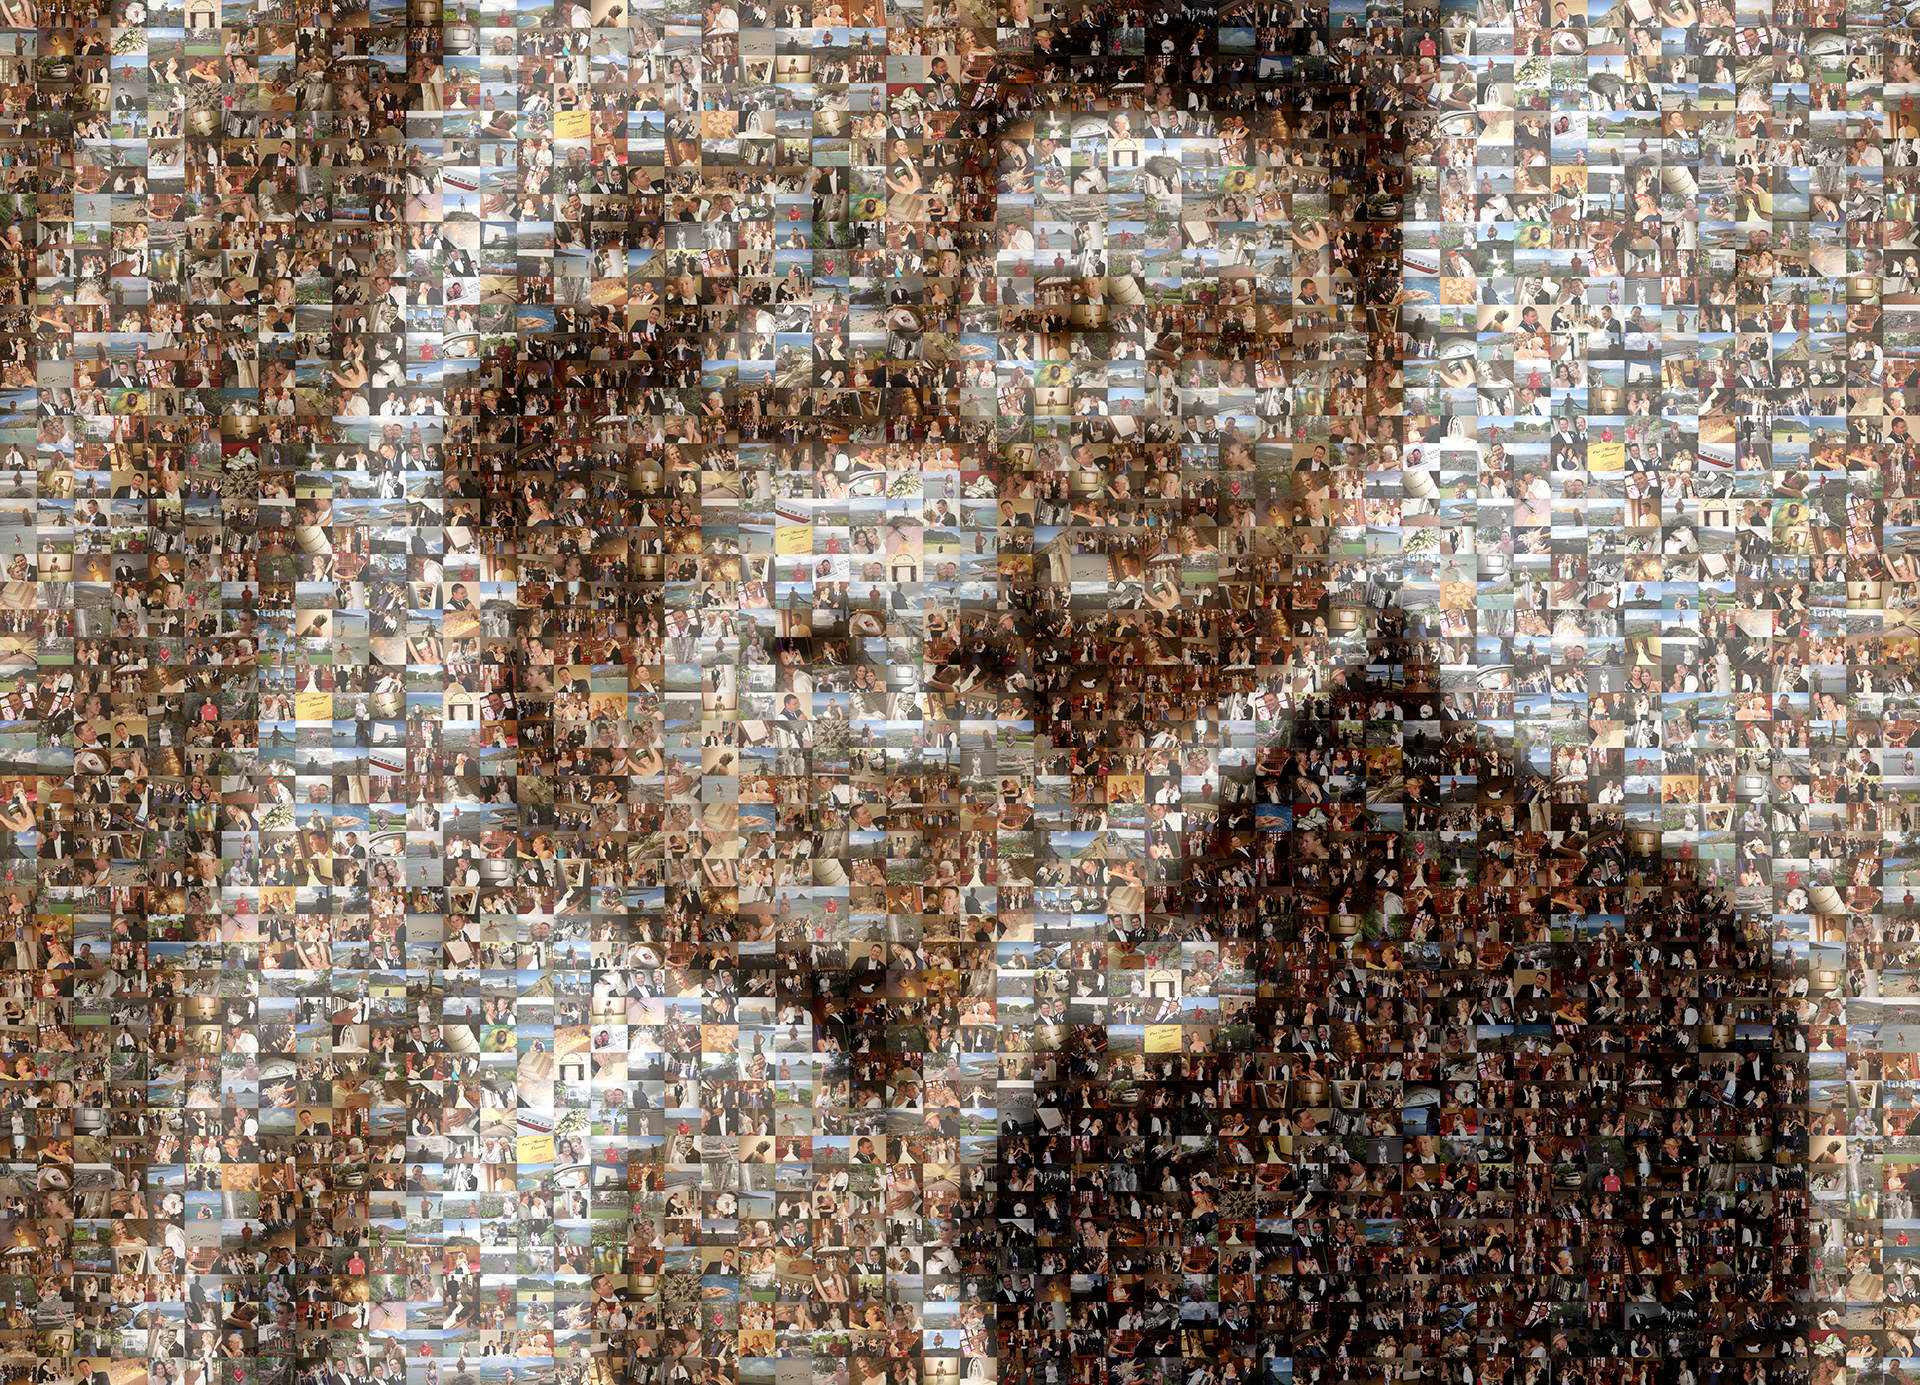 photo mosaic created using 270 lifetime photos